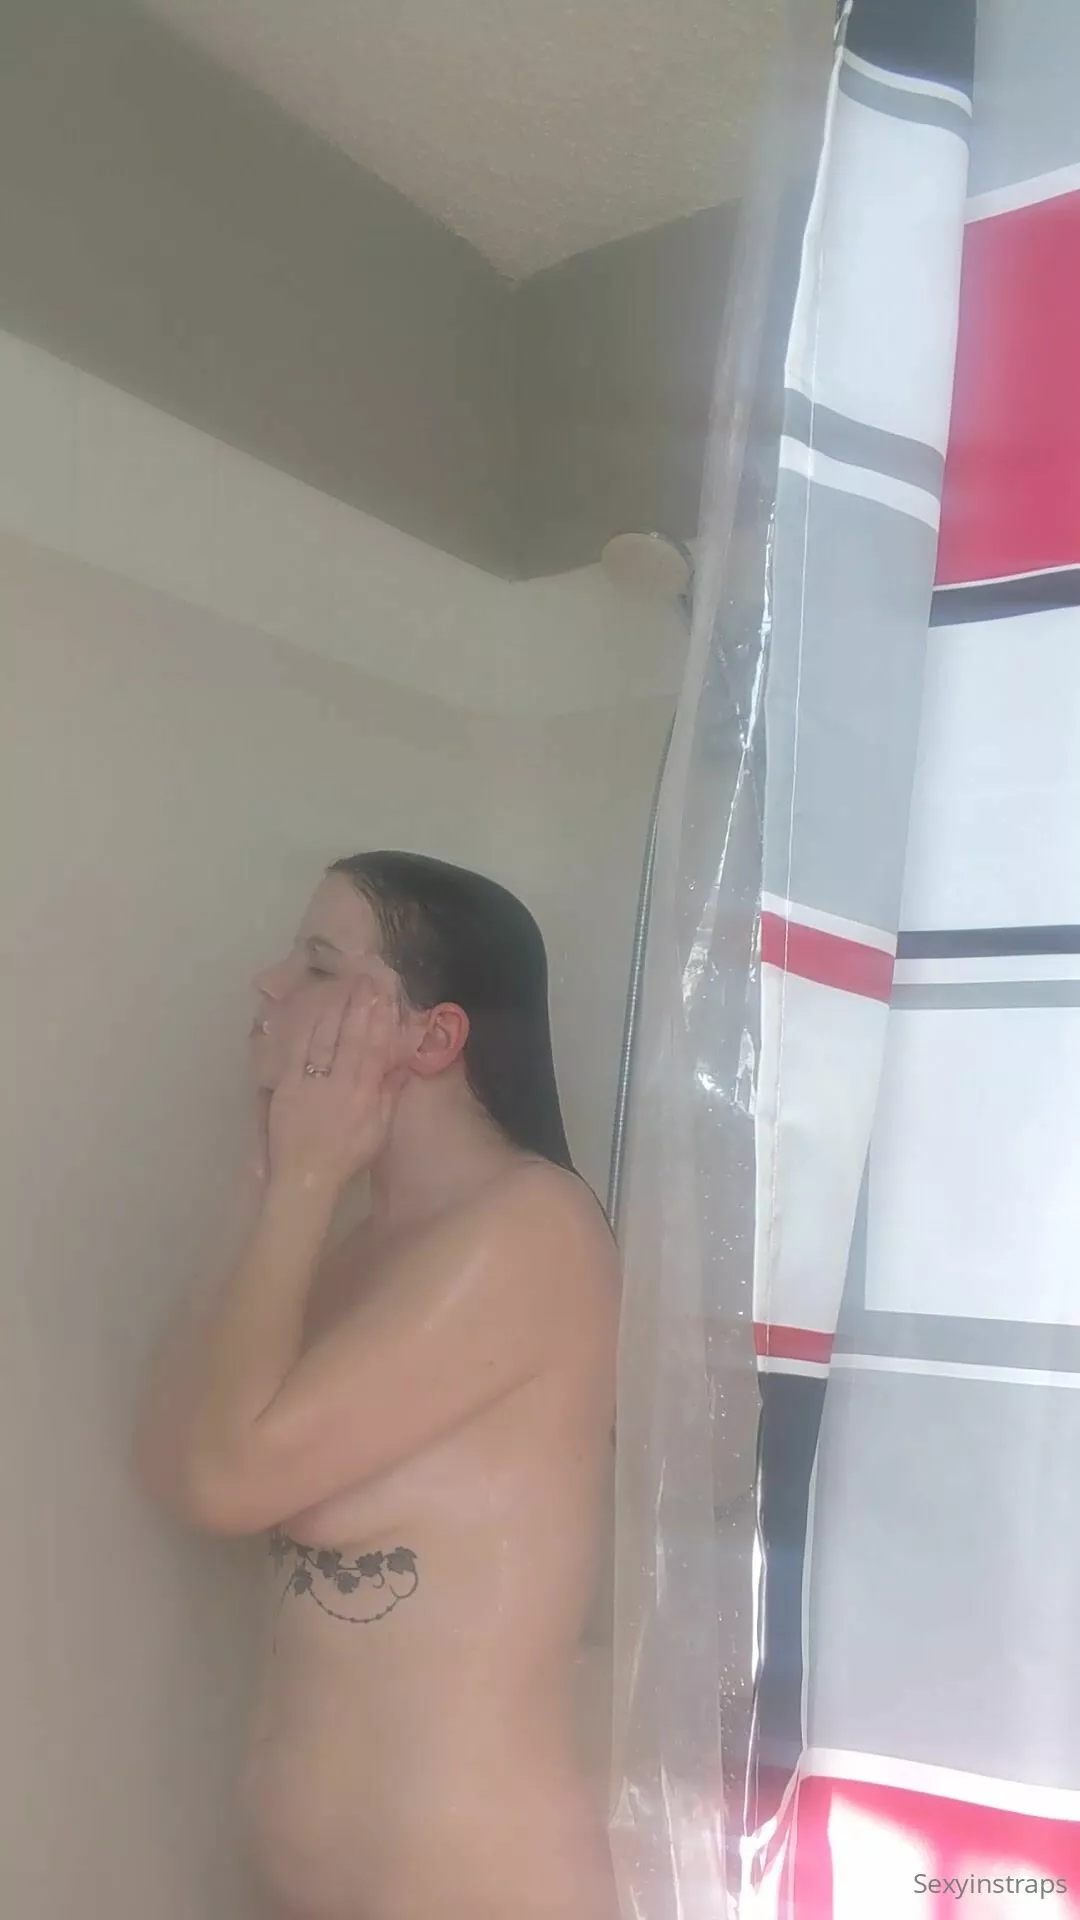 Sexyinstraps come watch me shower peeping tom voyeur style xxx ...